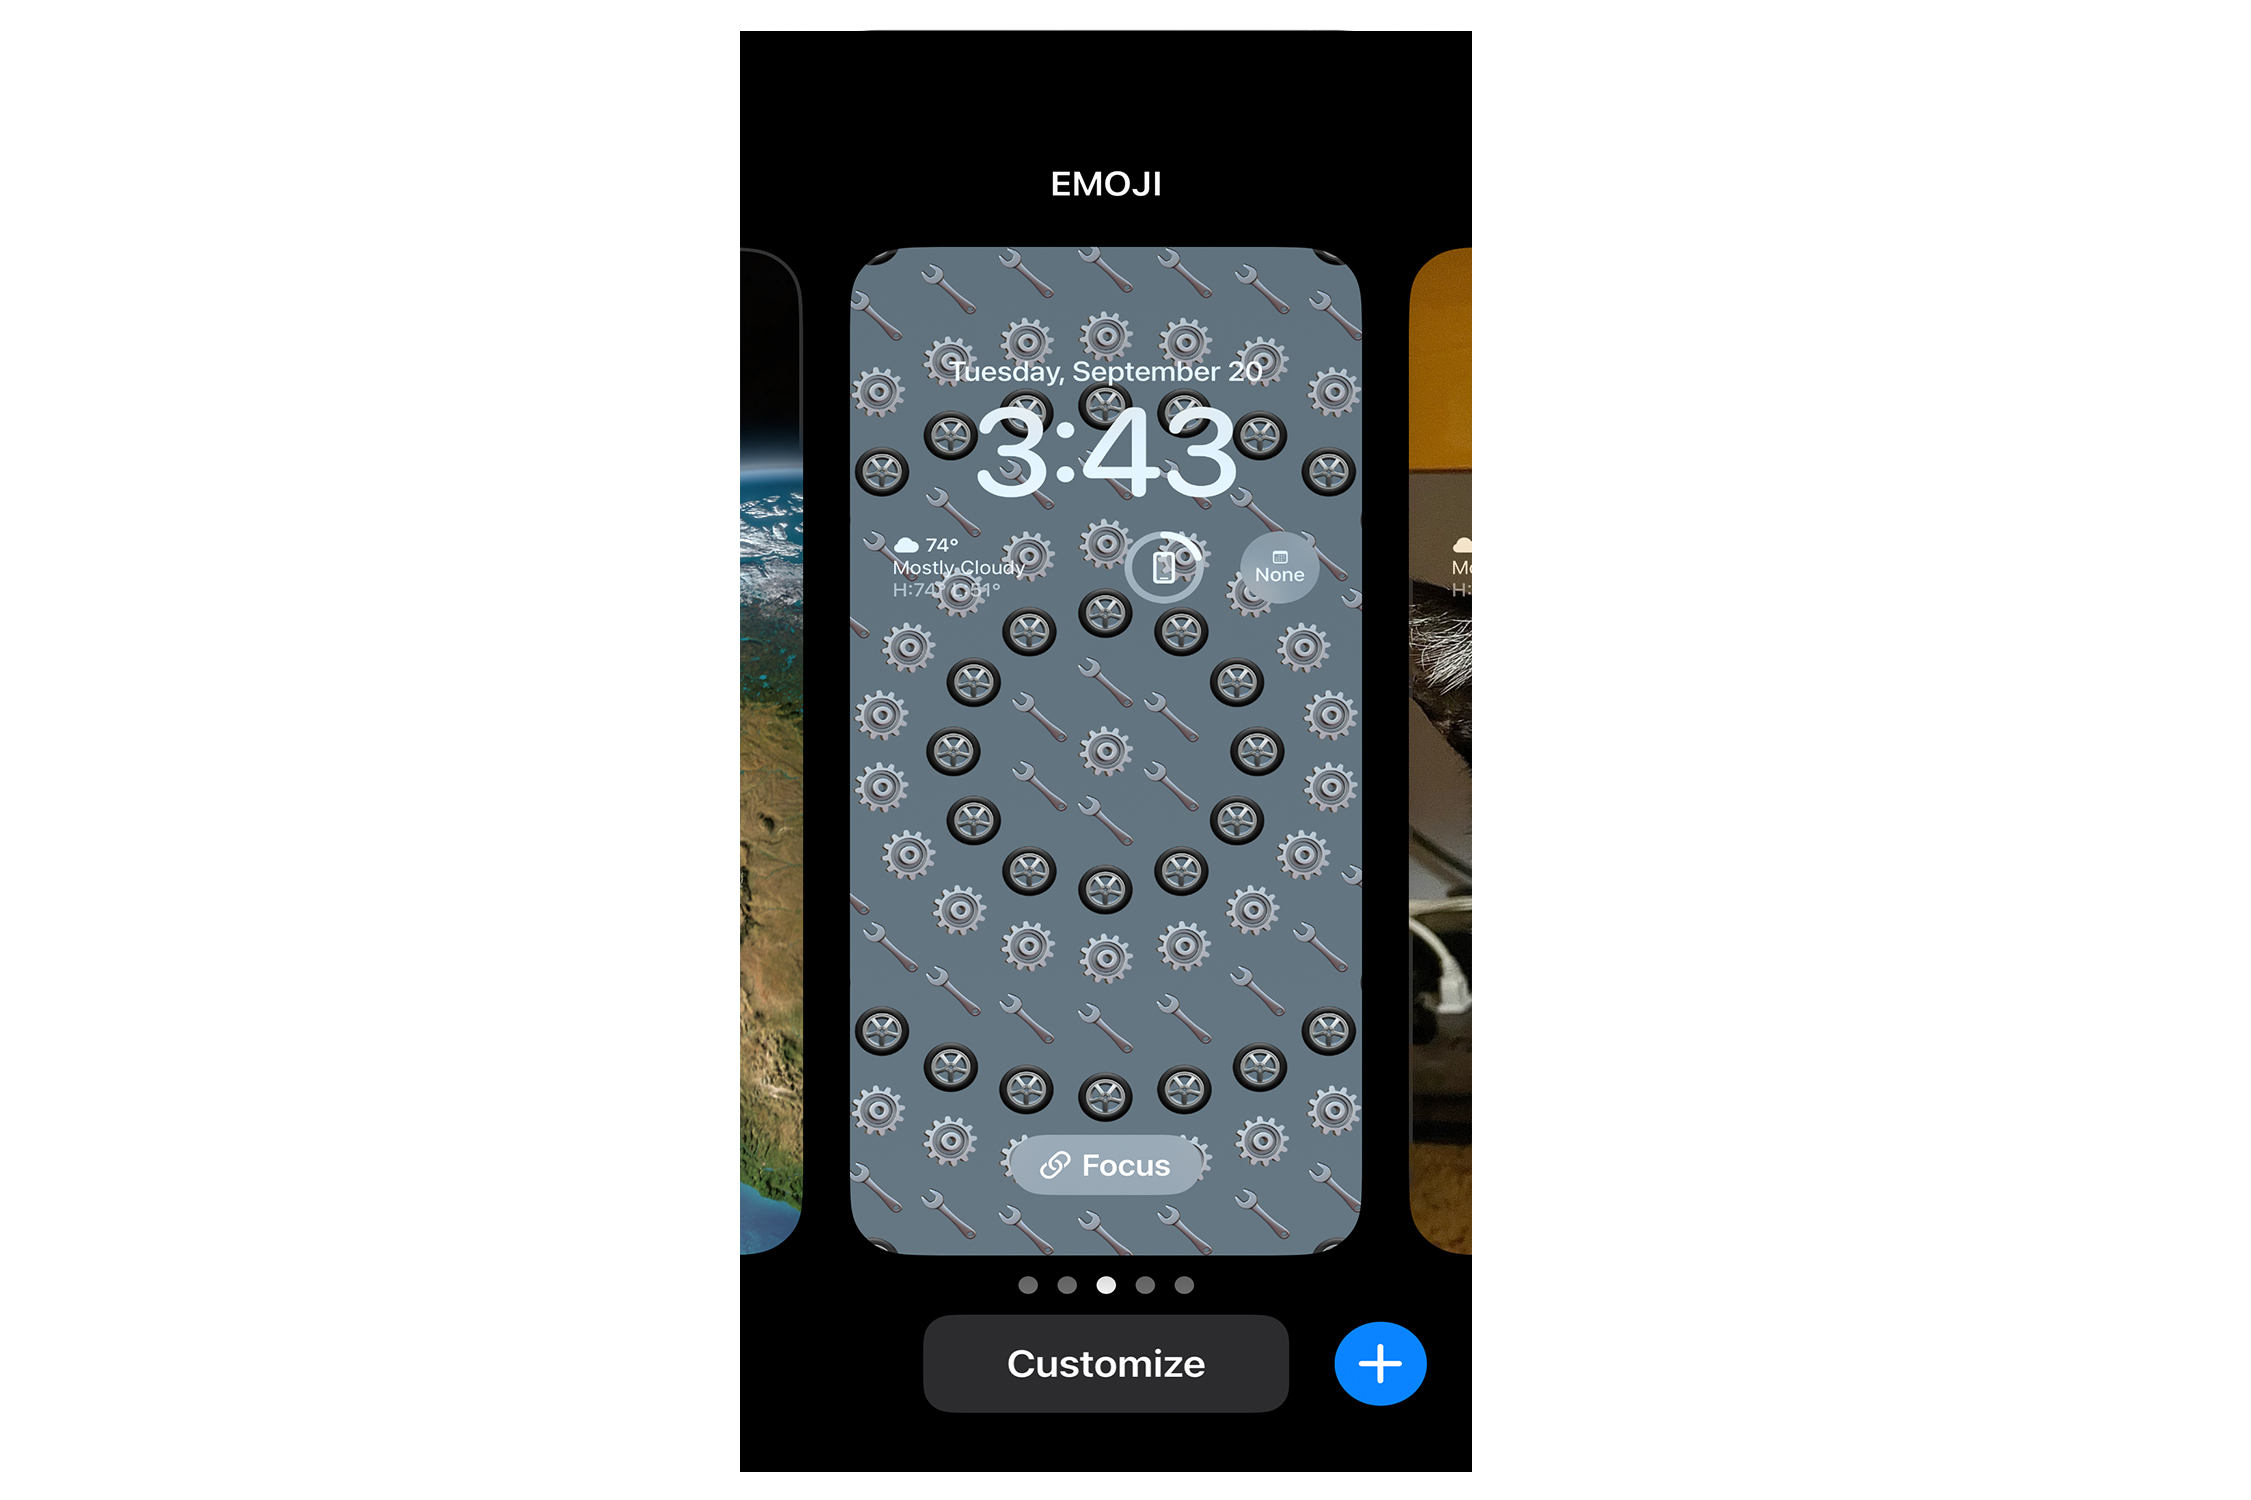 How to delete lock screen wallpapers in iOS 16 | Digital Trends